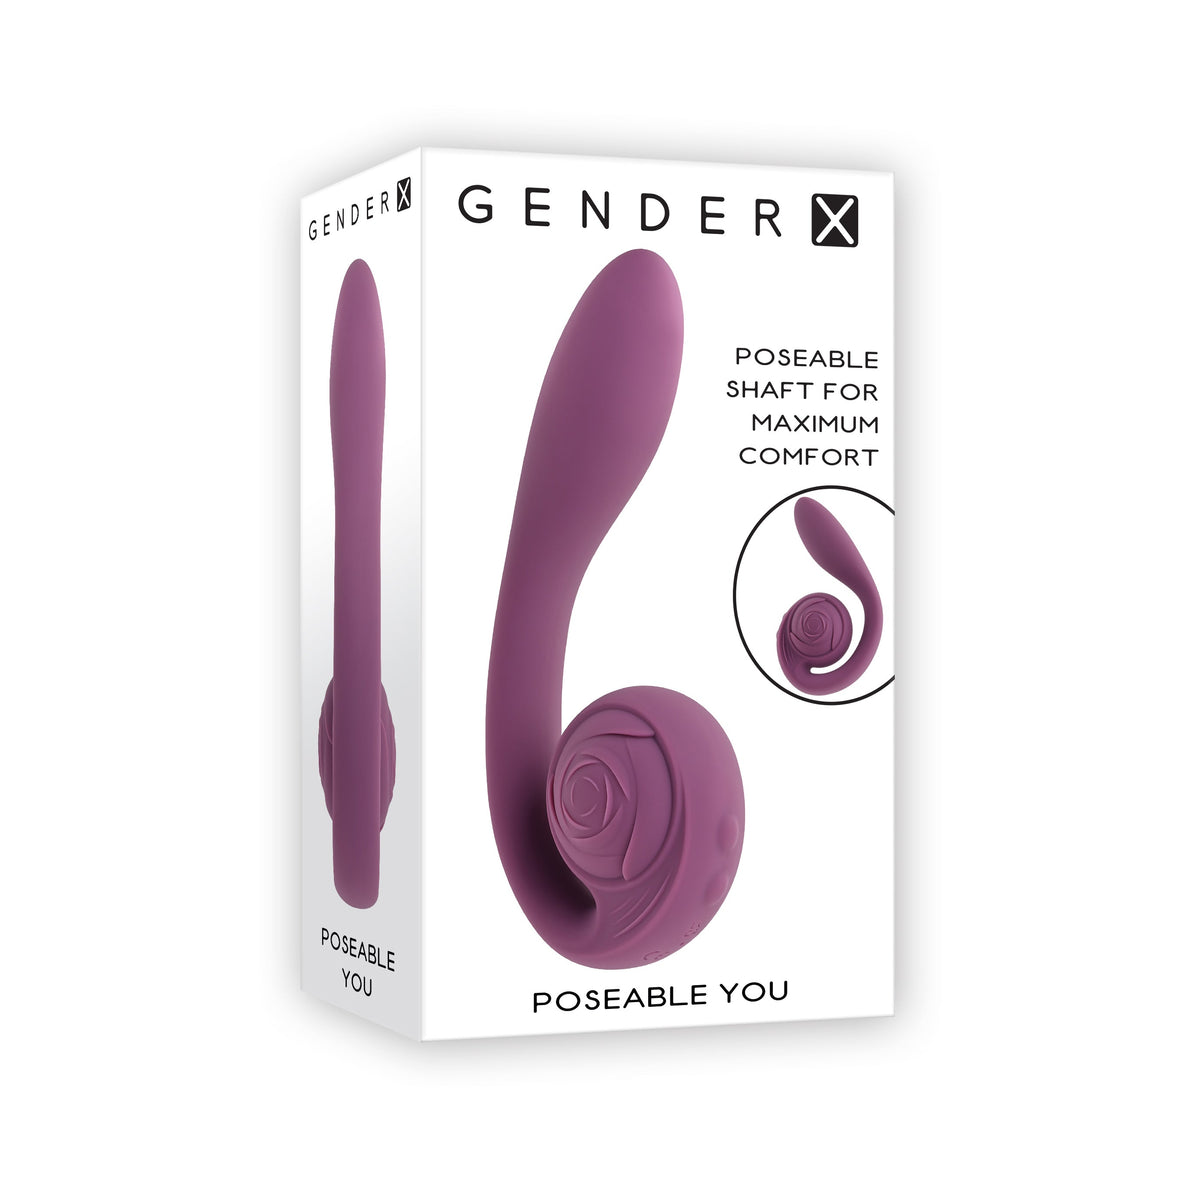 Evolved - Gender X Poseable You 灵活振动器（紫色）